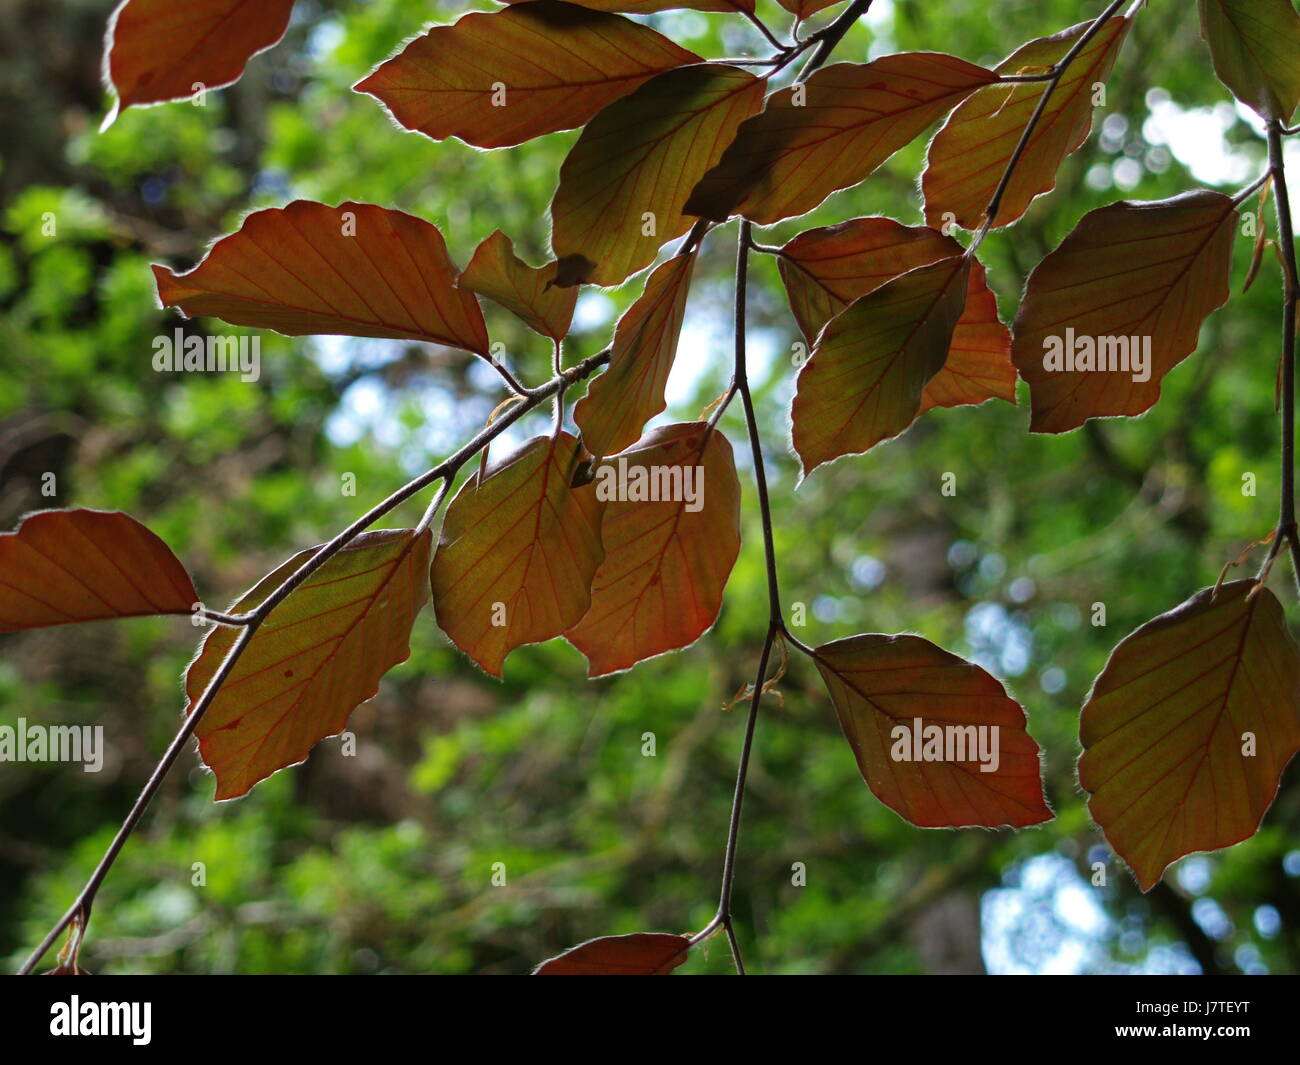 Nature Photography Stock Photo